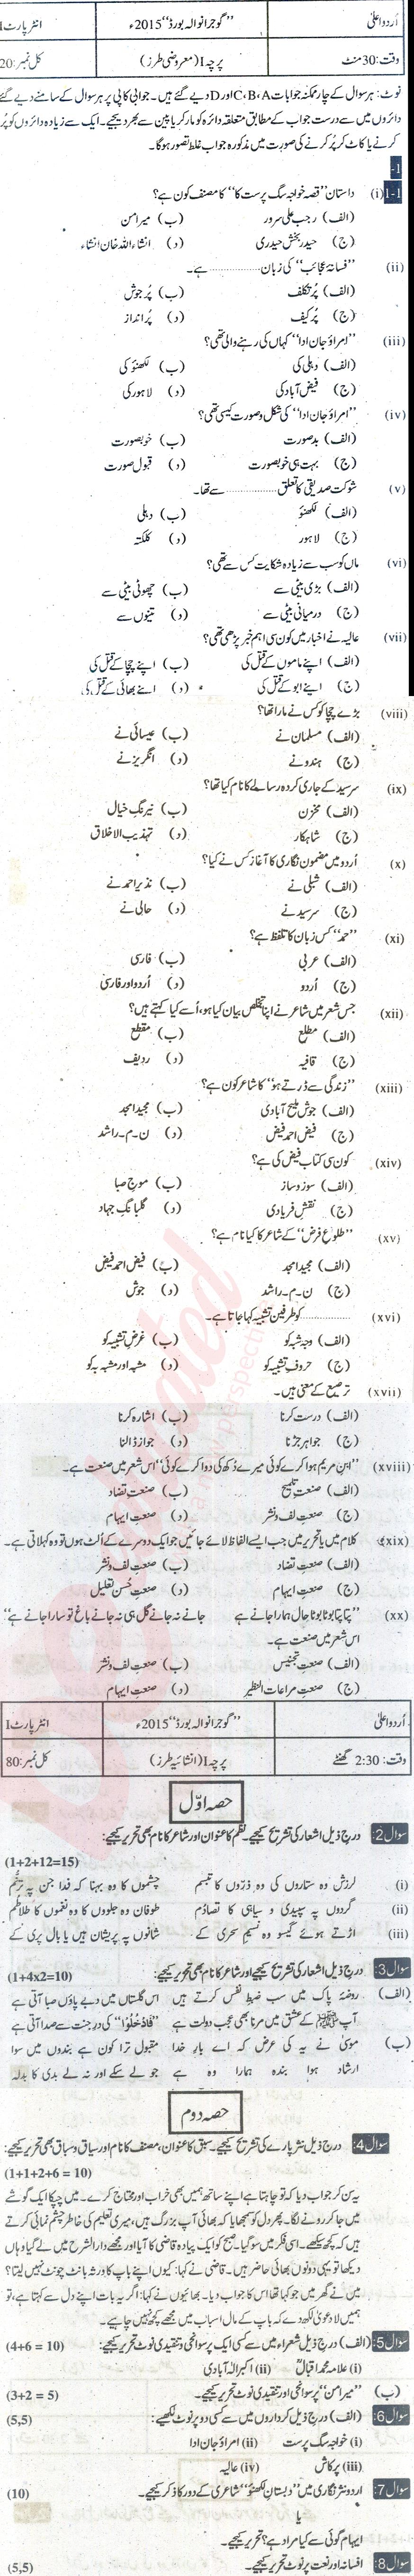 Urdu 11th class Past Paper Group 1 BISE Gujranwala 2015